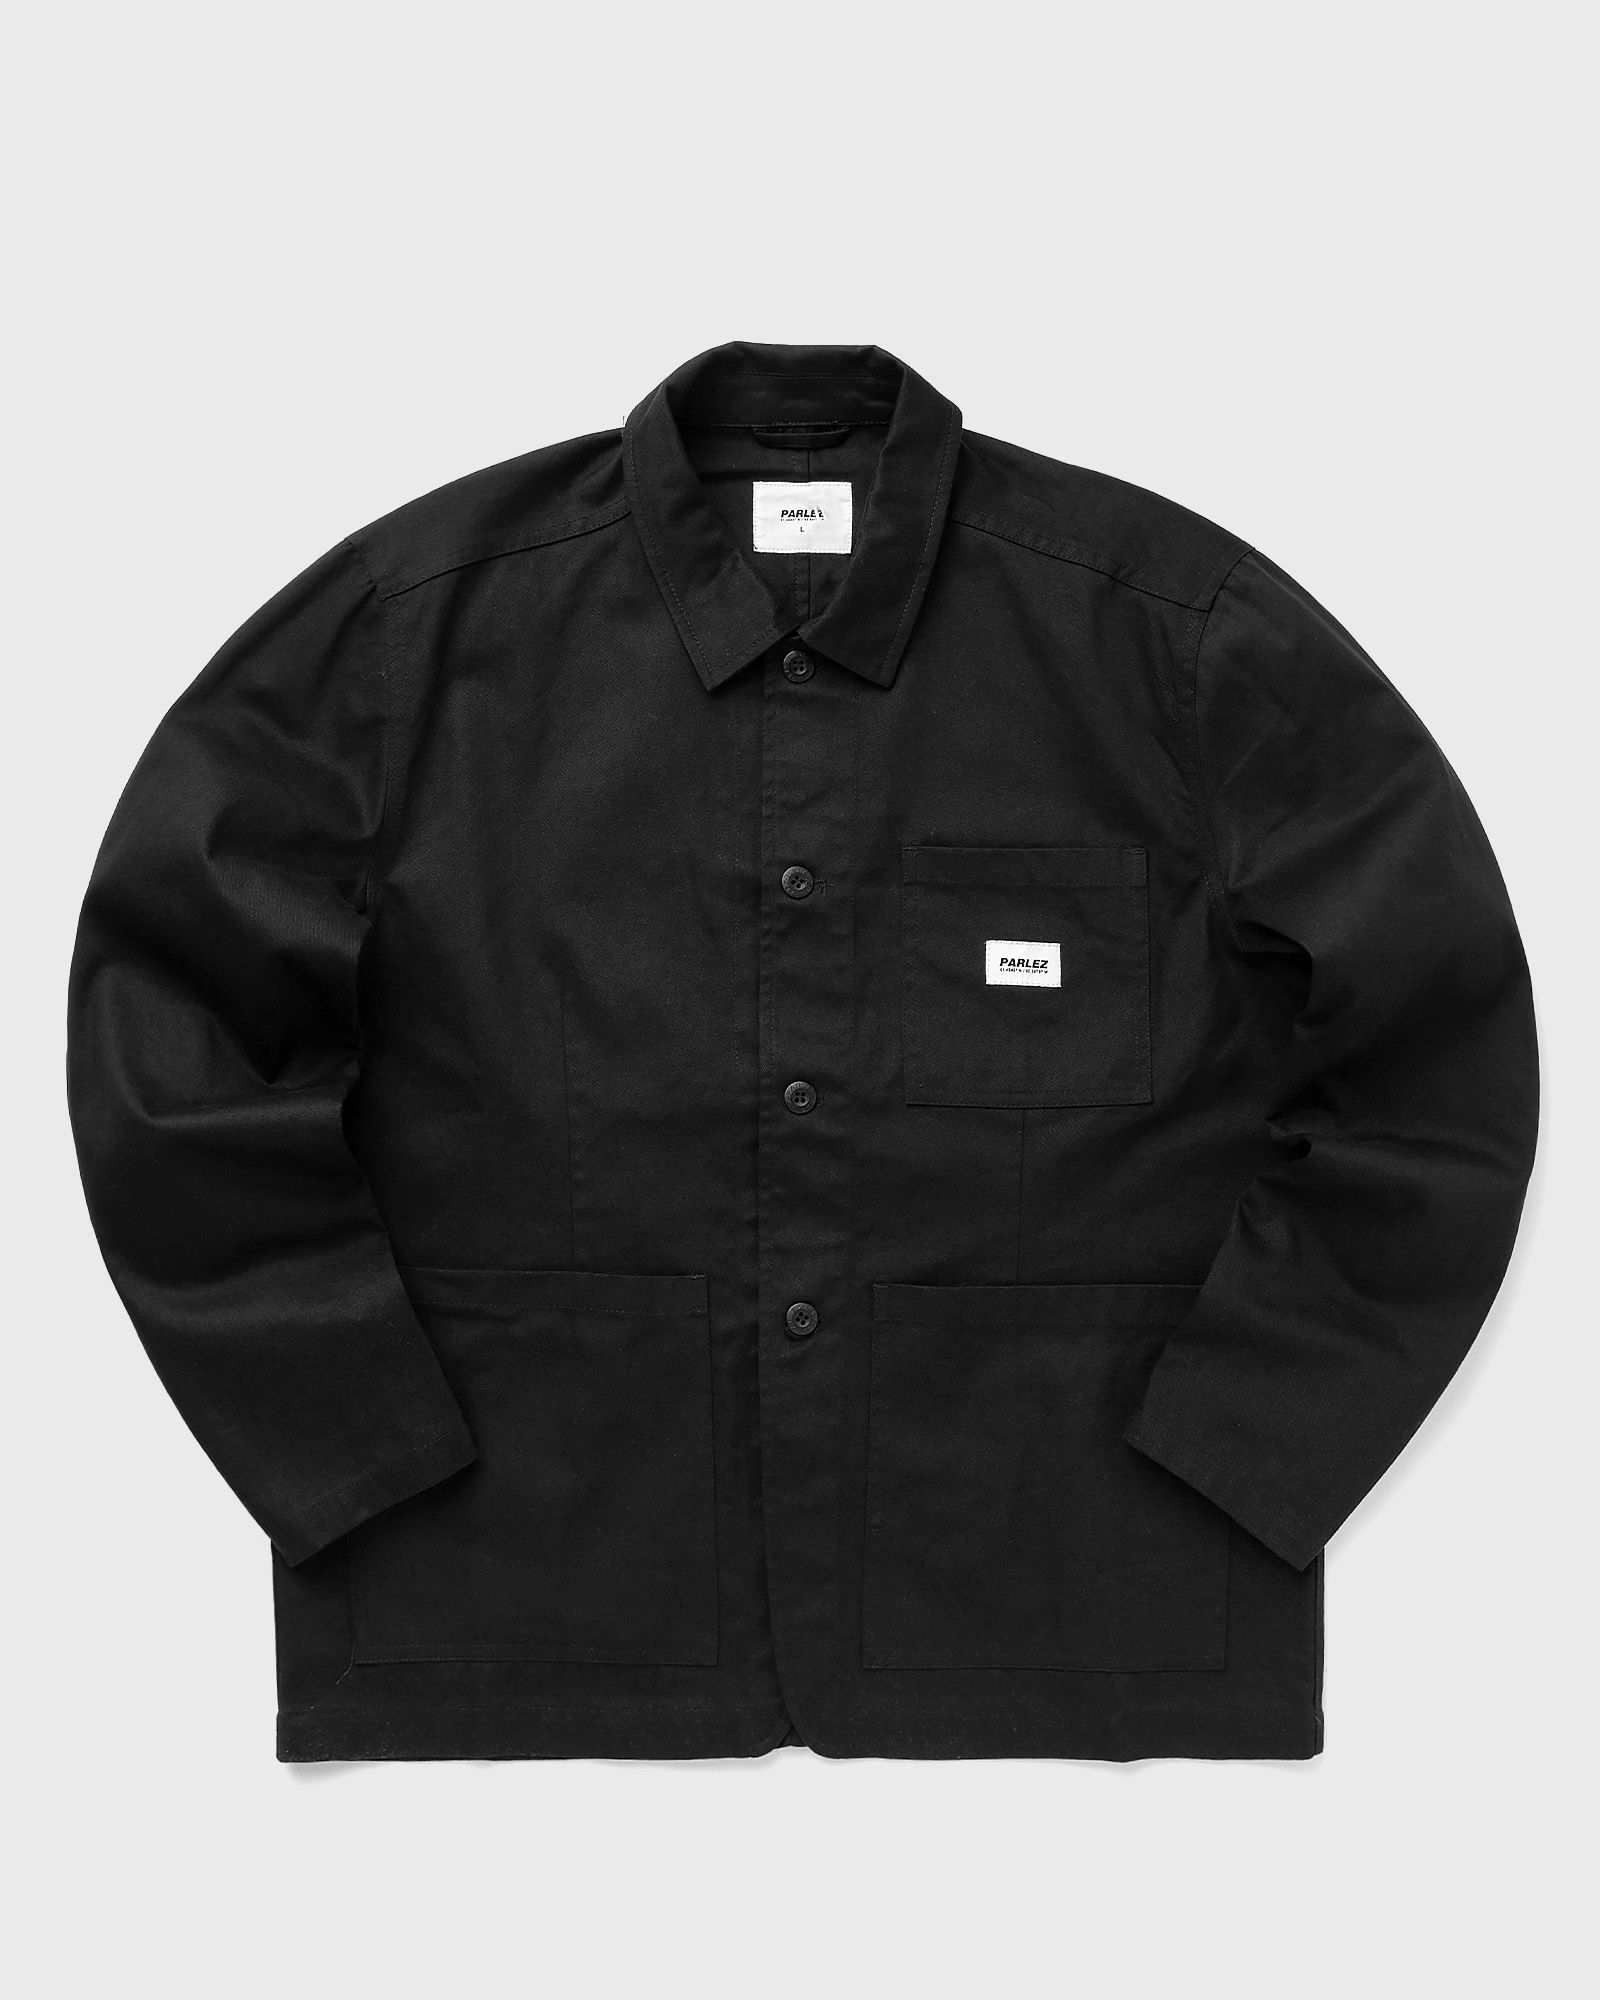 Parlez - panama jacket men overshirts black in größe:xl